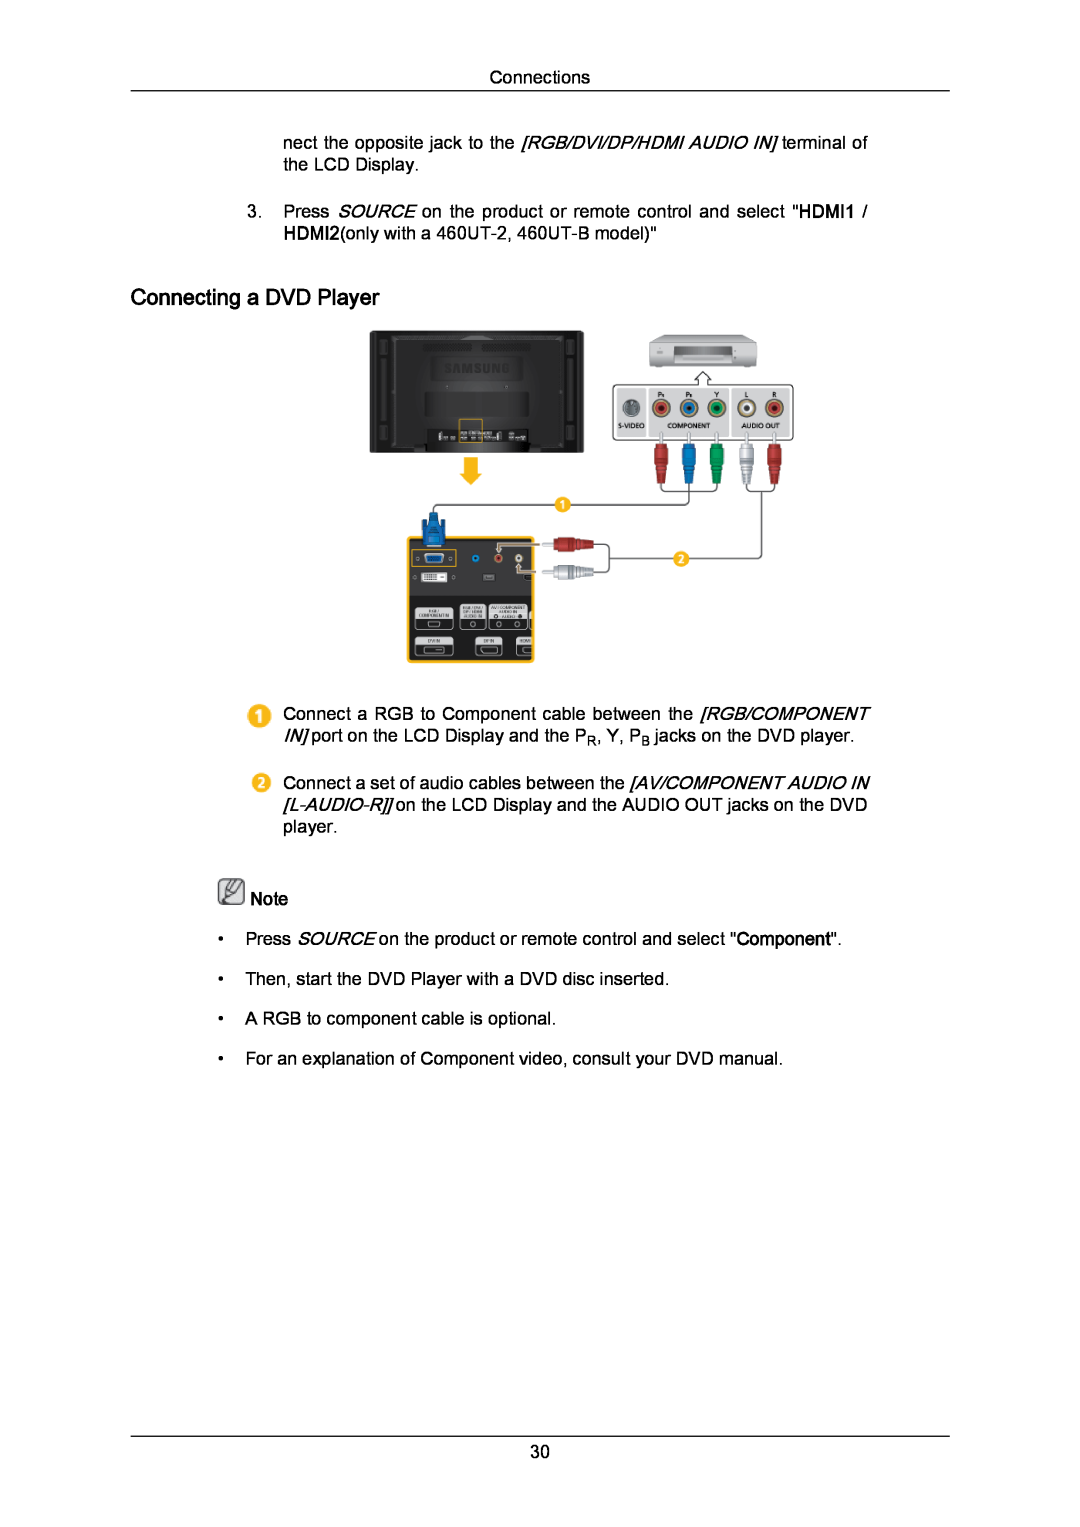 Samsung 460UT-2, 460UTN-B, 460UTN-2, 460UT-B user manual Connecting a DVD Player 